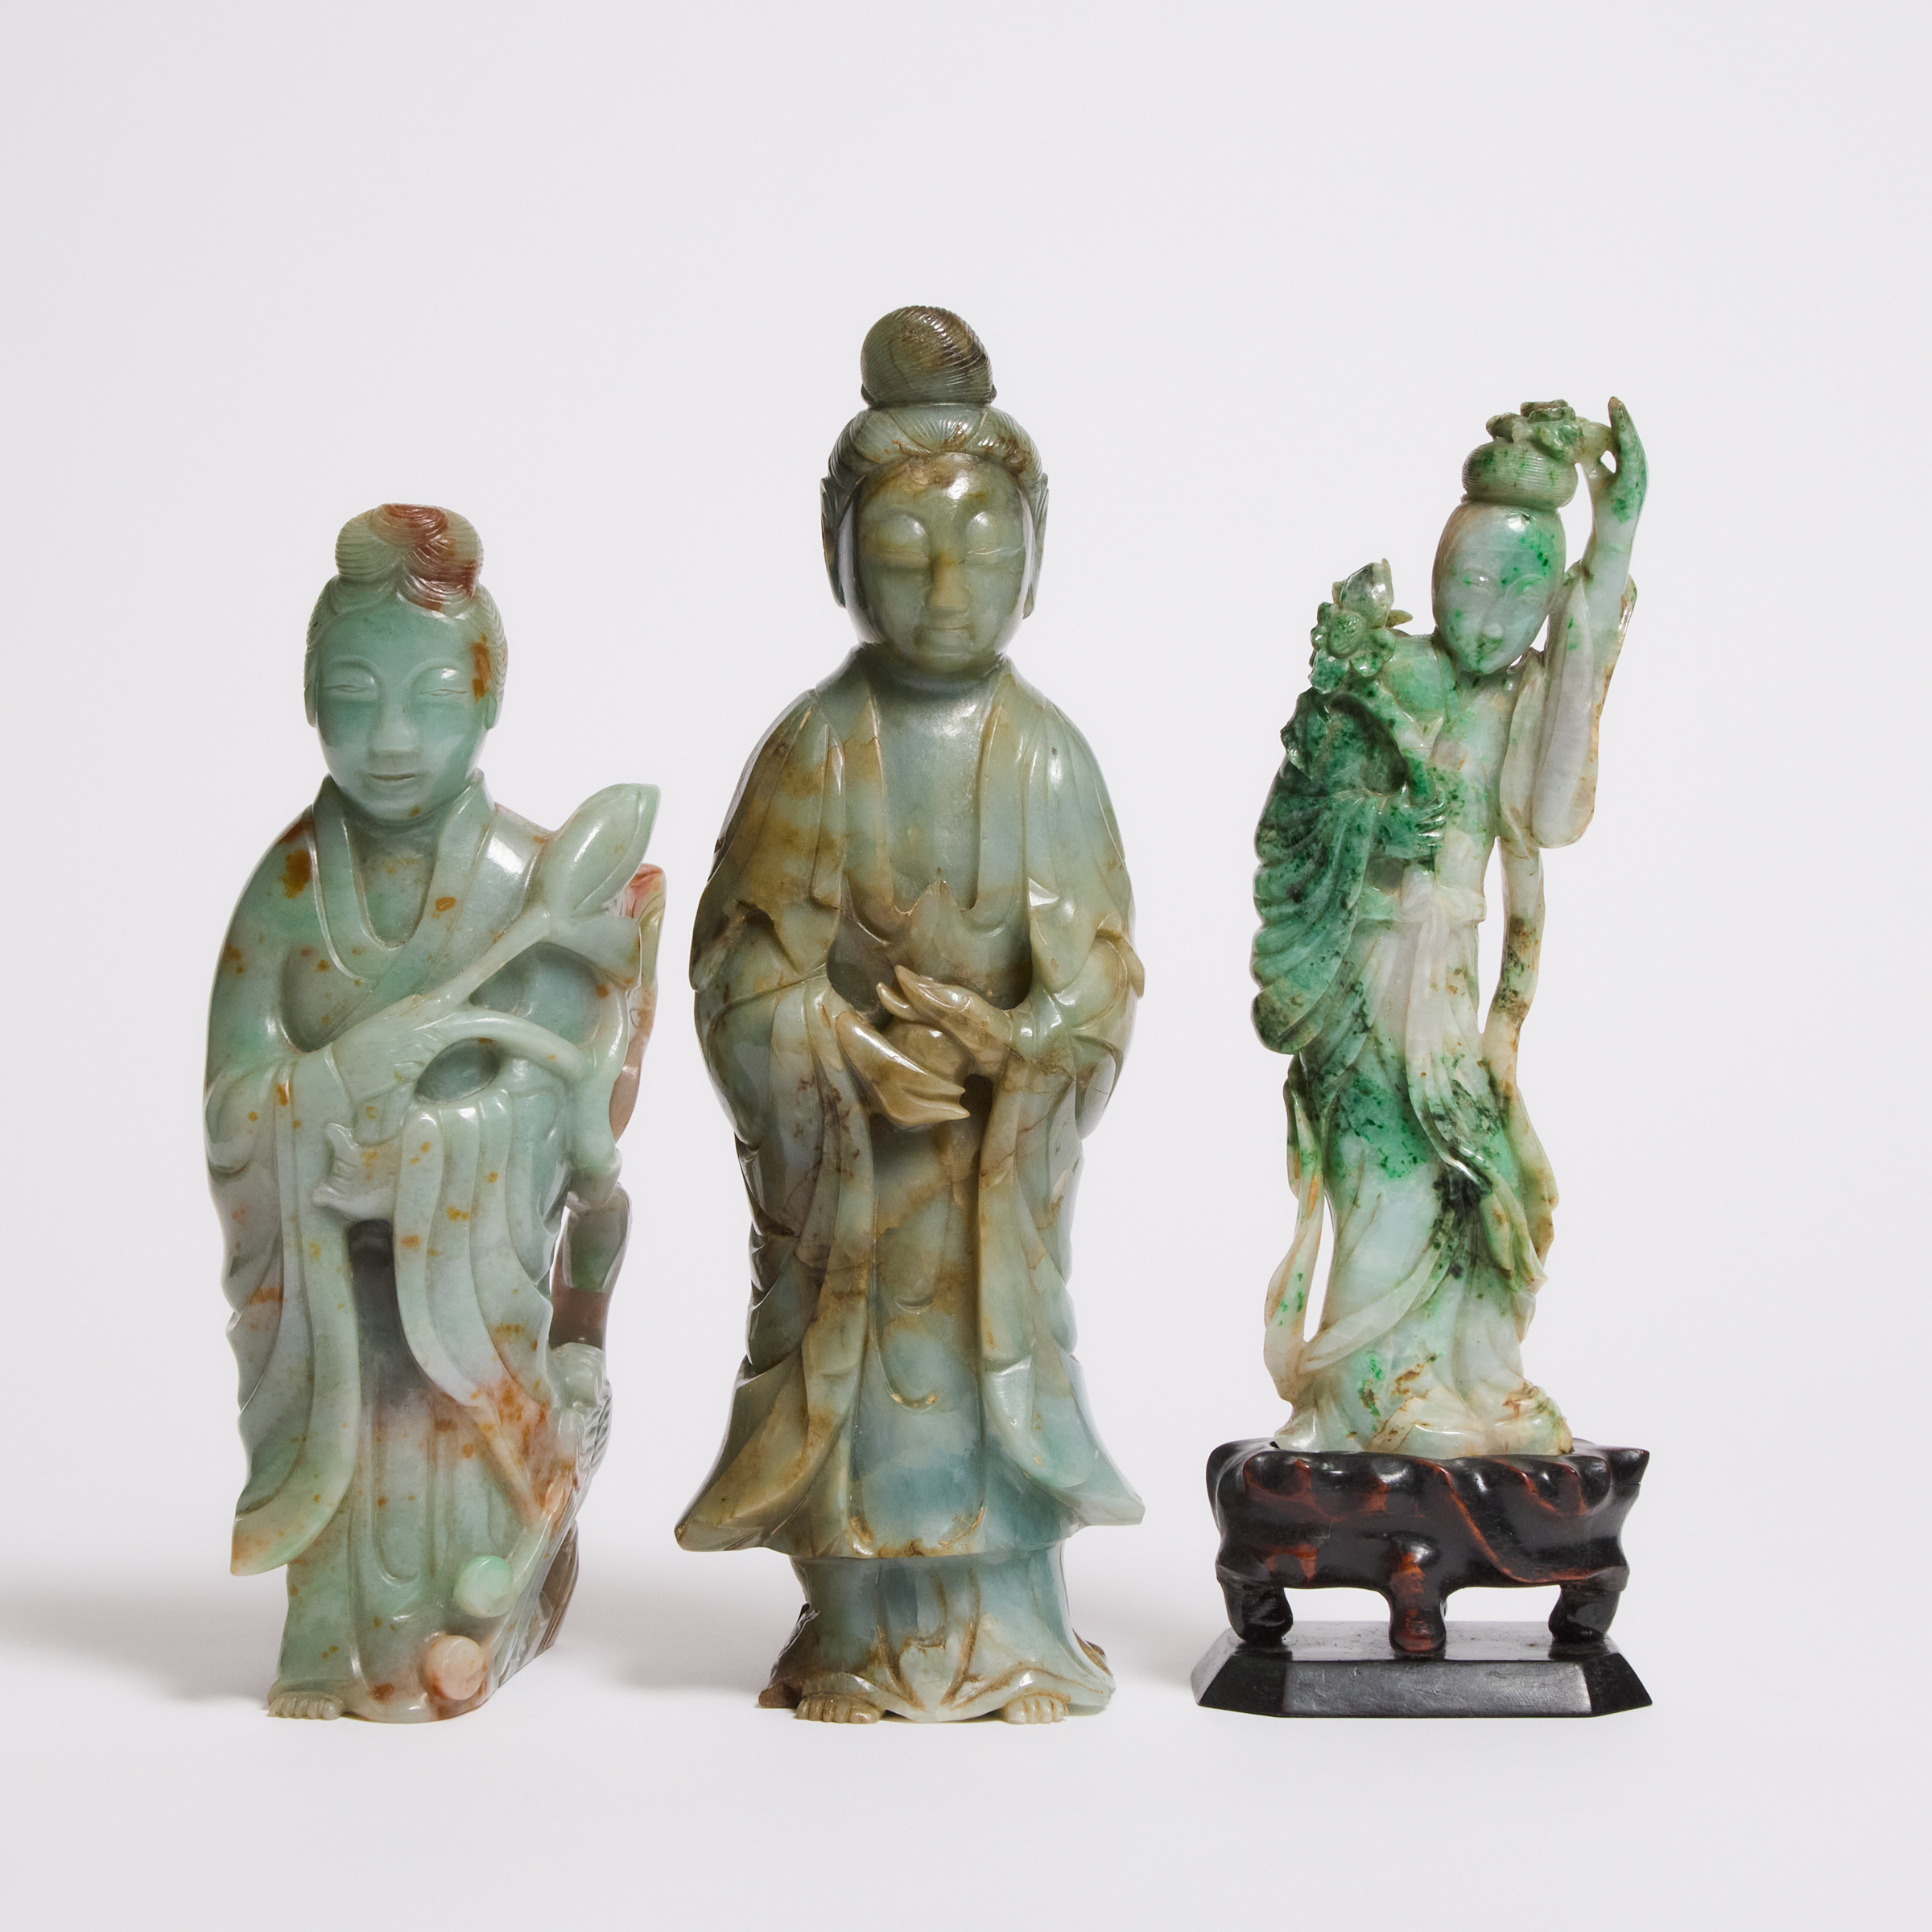 A Group of Three Jadeite Figures